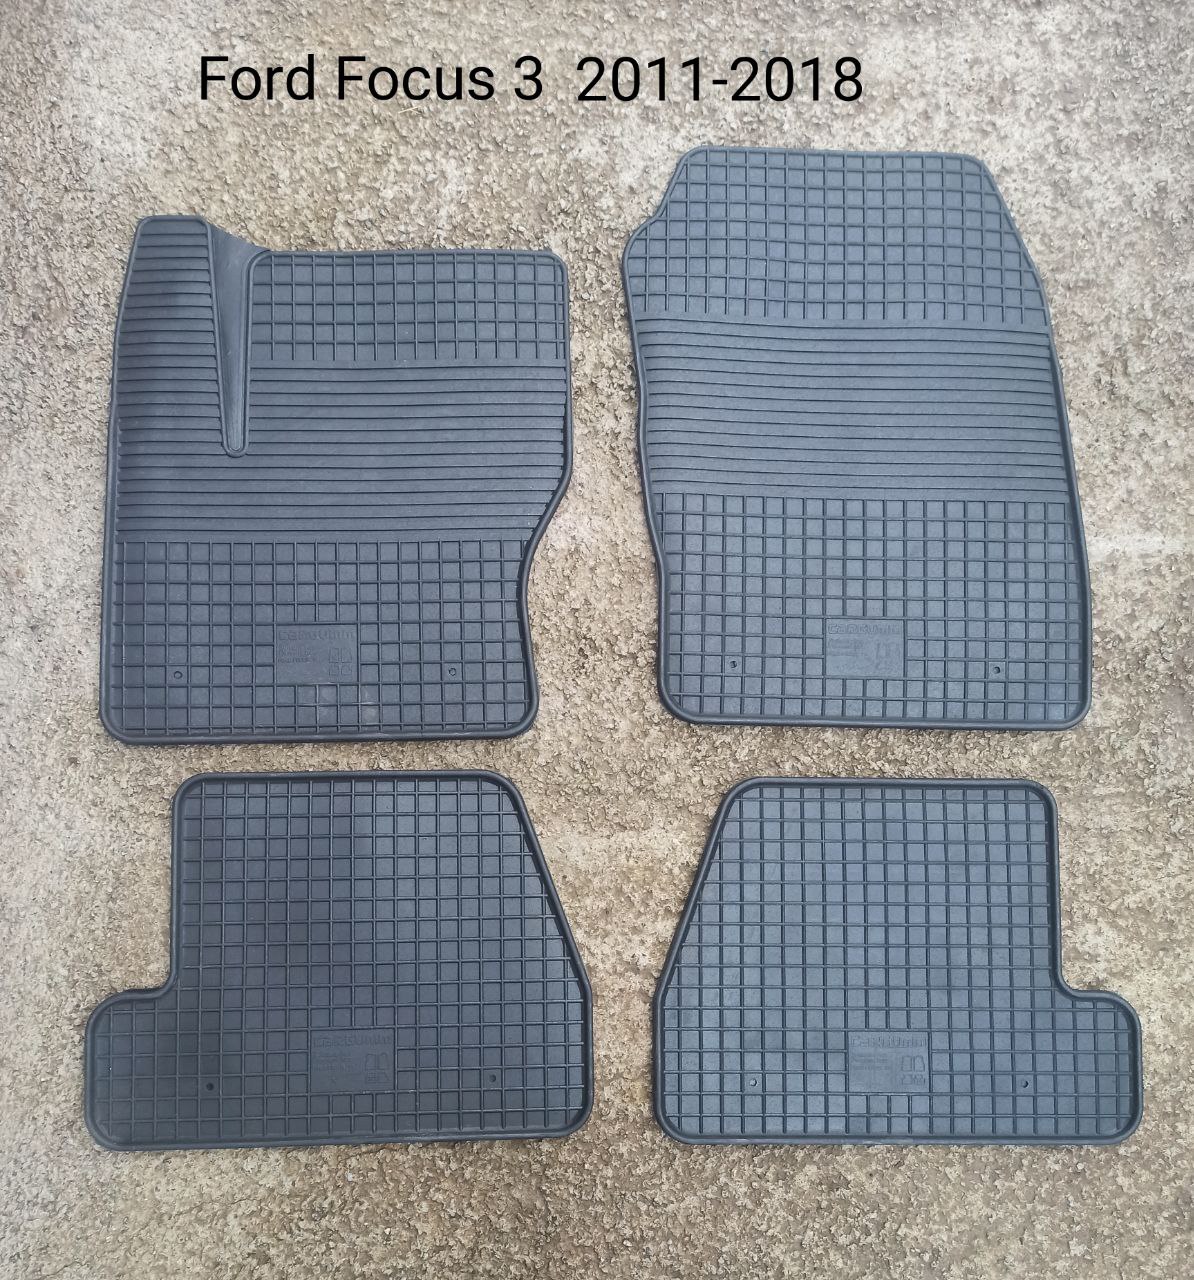 Ford Focus 3 2011-2018